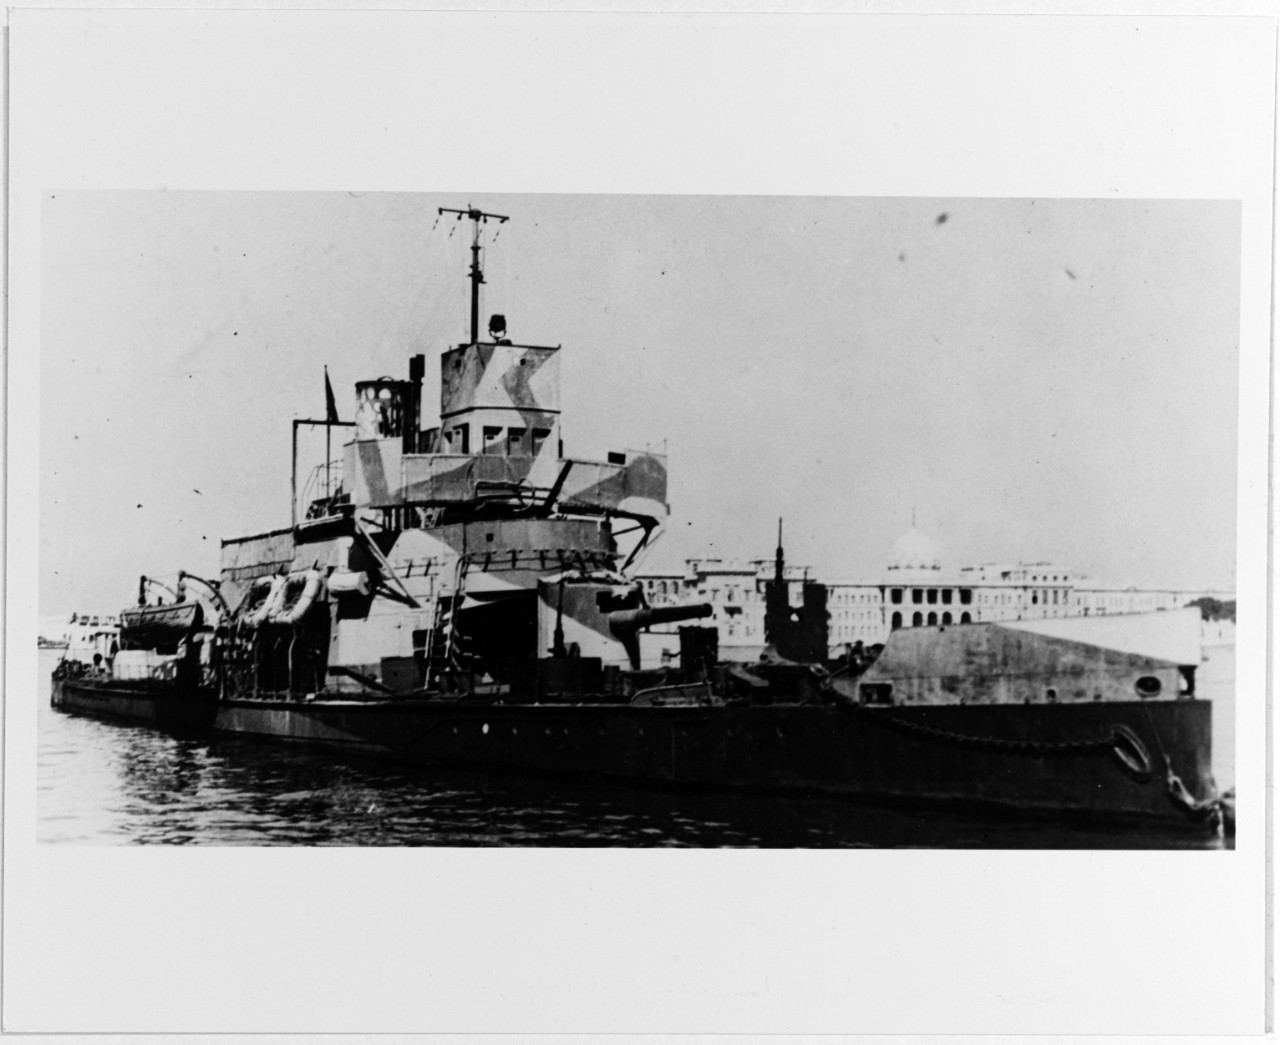 APHIS (British river gunboat, 1915-1947)